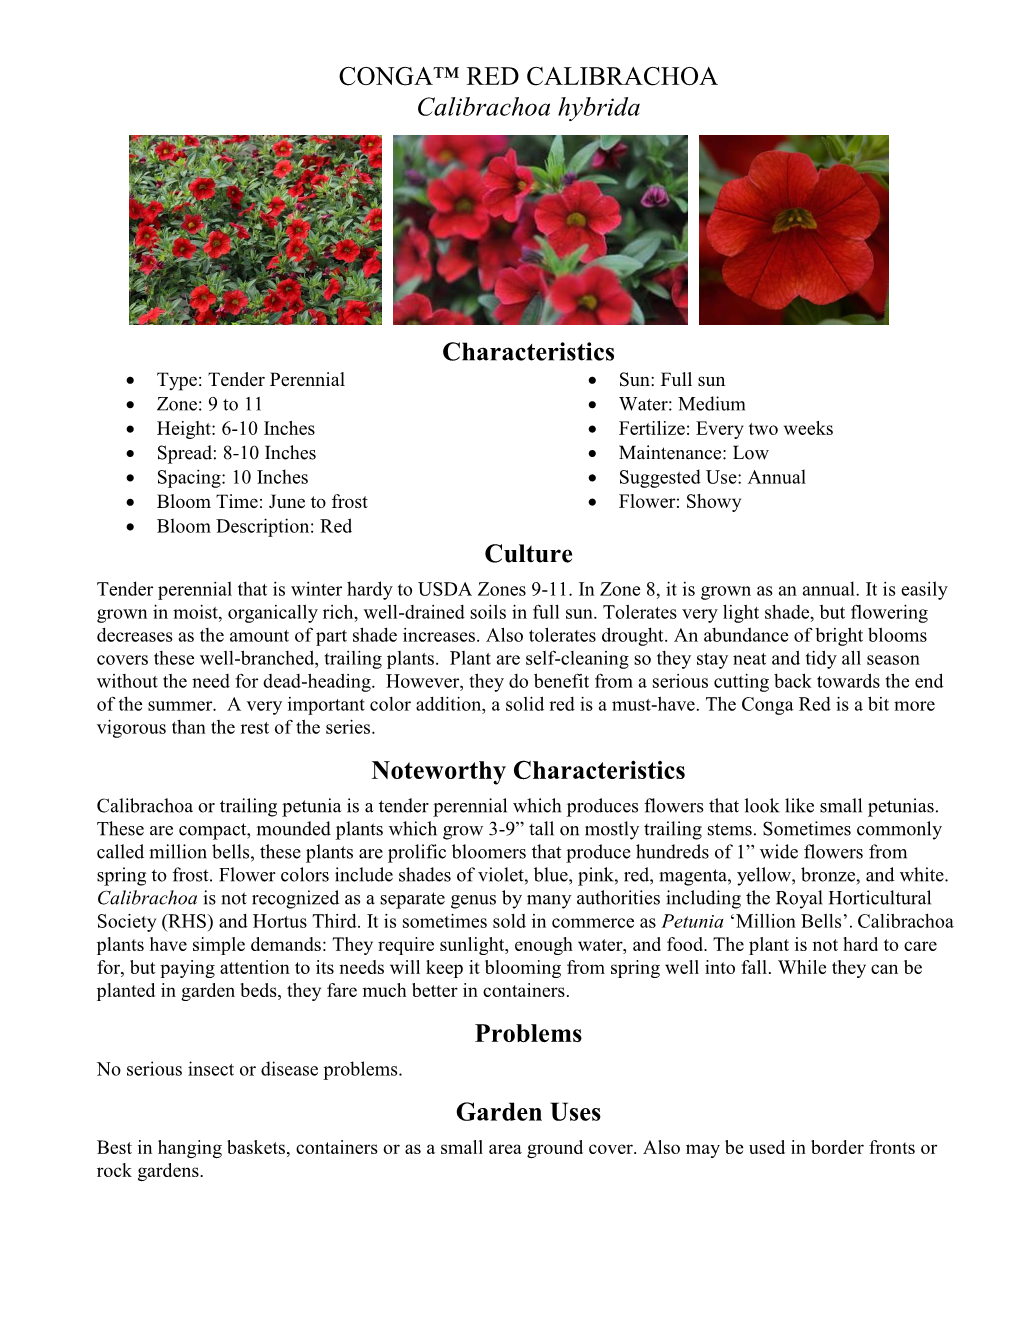 CONGA™ RED CALIBRACHOA Calibrachoa Hybrida Characteristics Culture Noteworthy Characteristics Problems Garden Uses